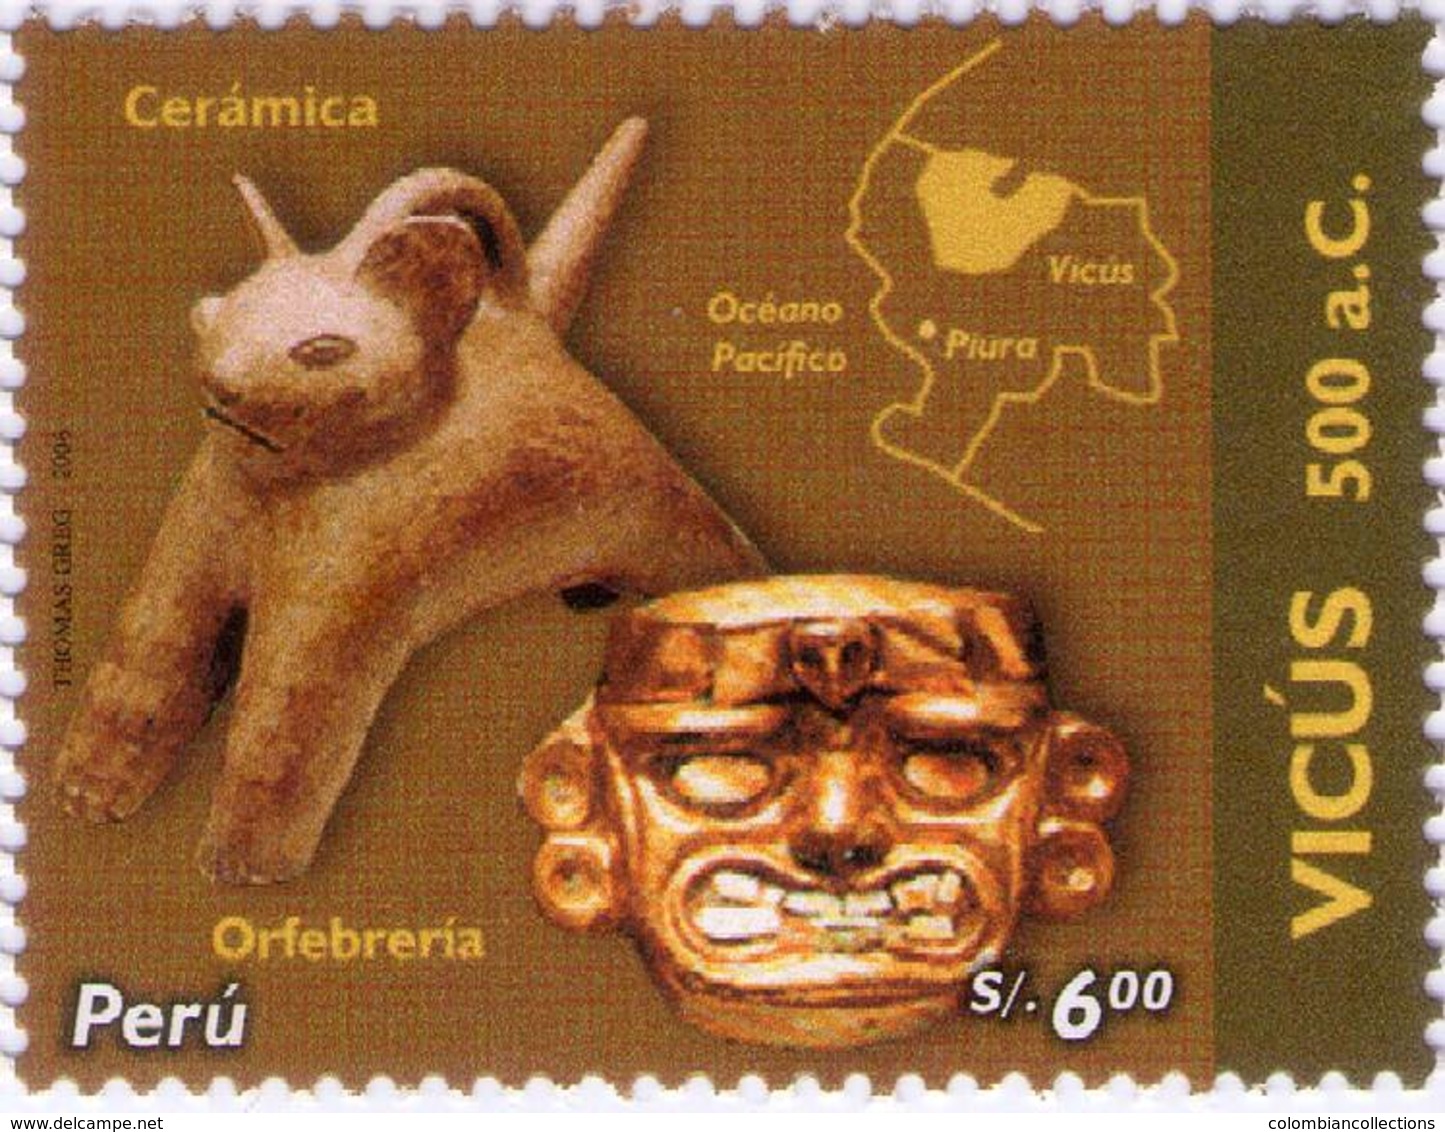 Lote P2006-13, Peru, 2006, Sello, Stamp, Vicus, Culturas Indigenas Peruanas, Indigenous Cultures - Perú